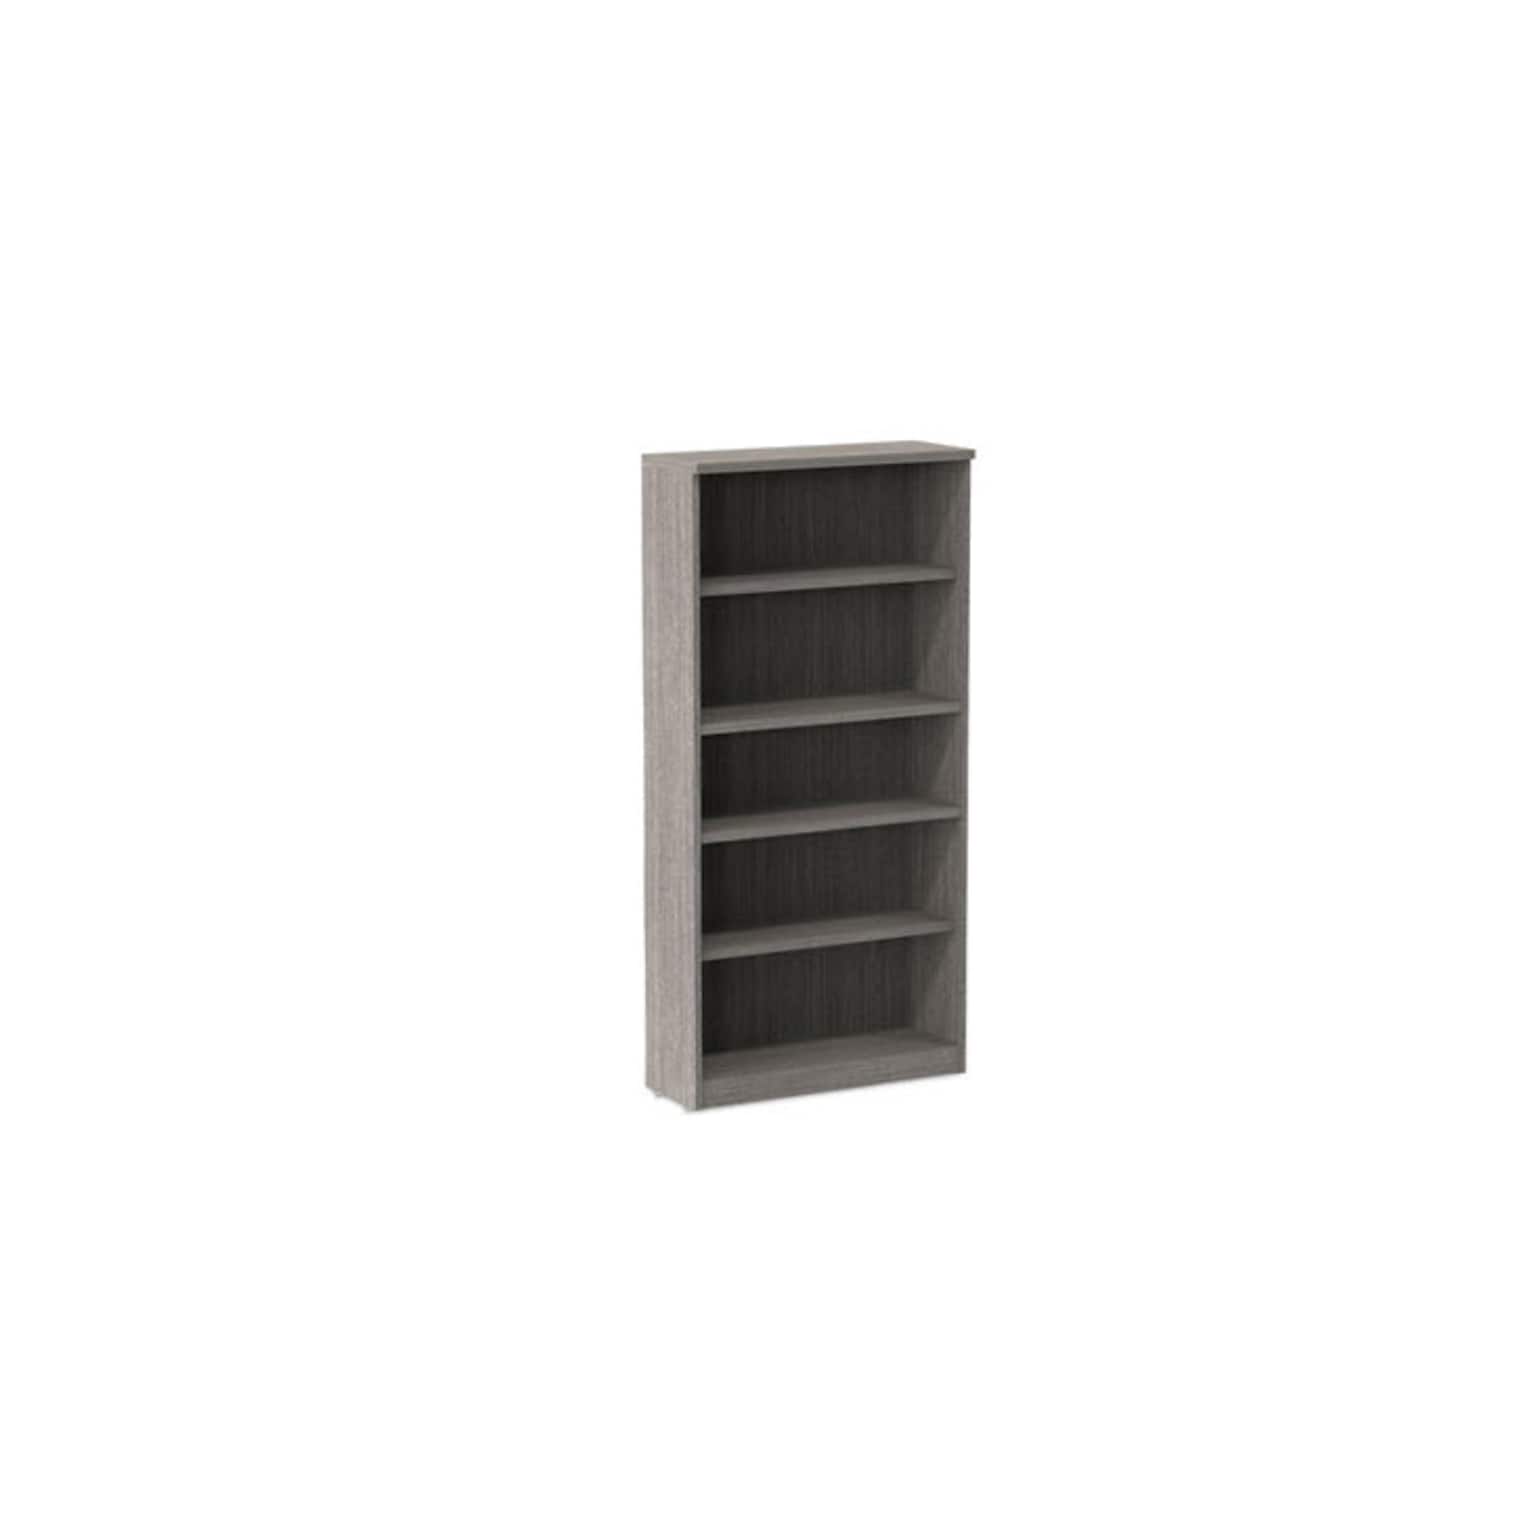 Alera Valencia Series Bookcase, 5-Shelves, 31.75 x 14 x 64.75, Gray (ALEVA636632GY)